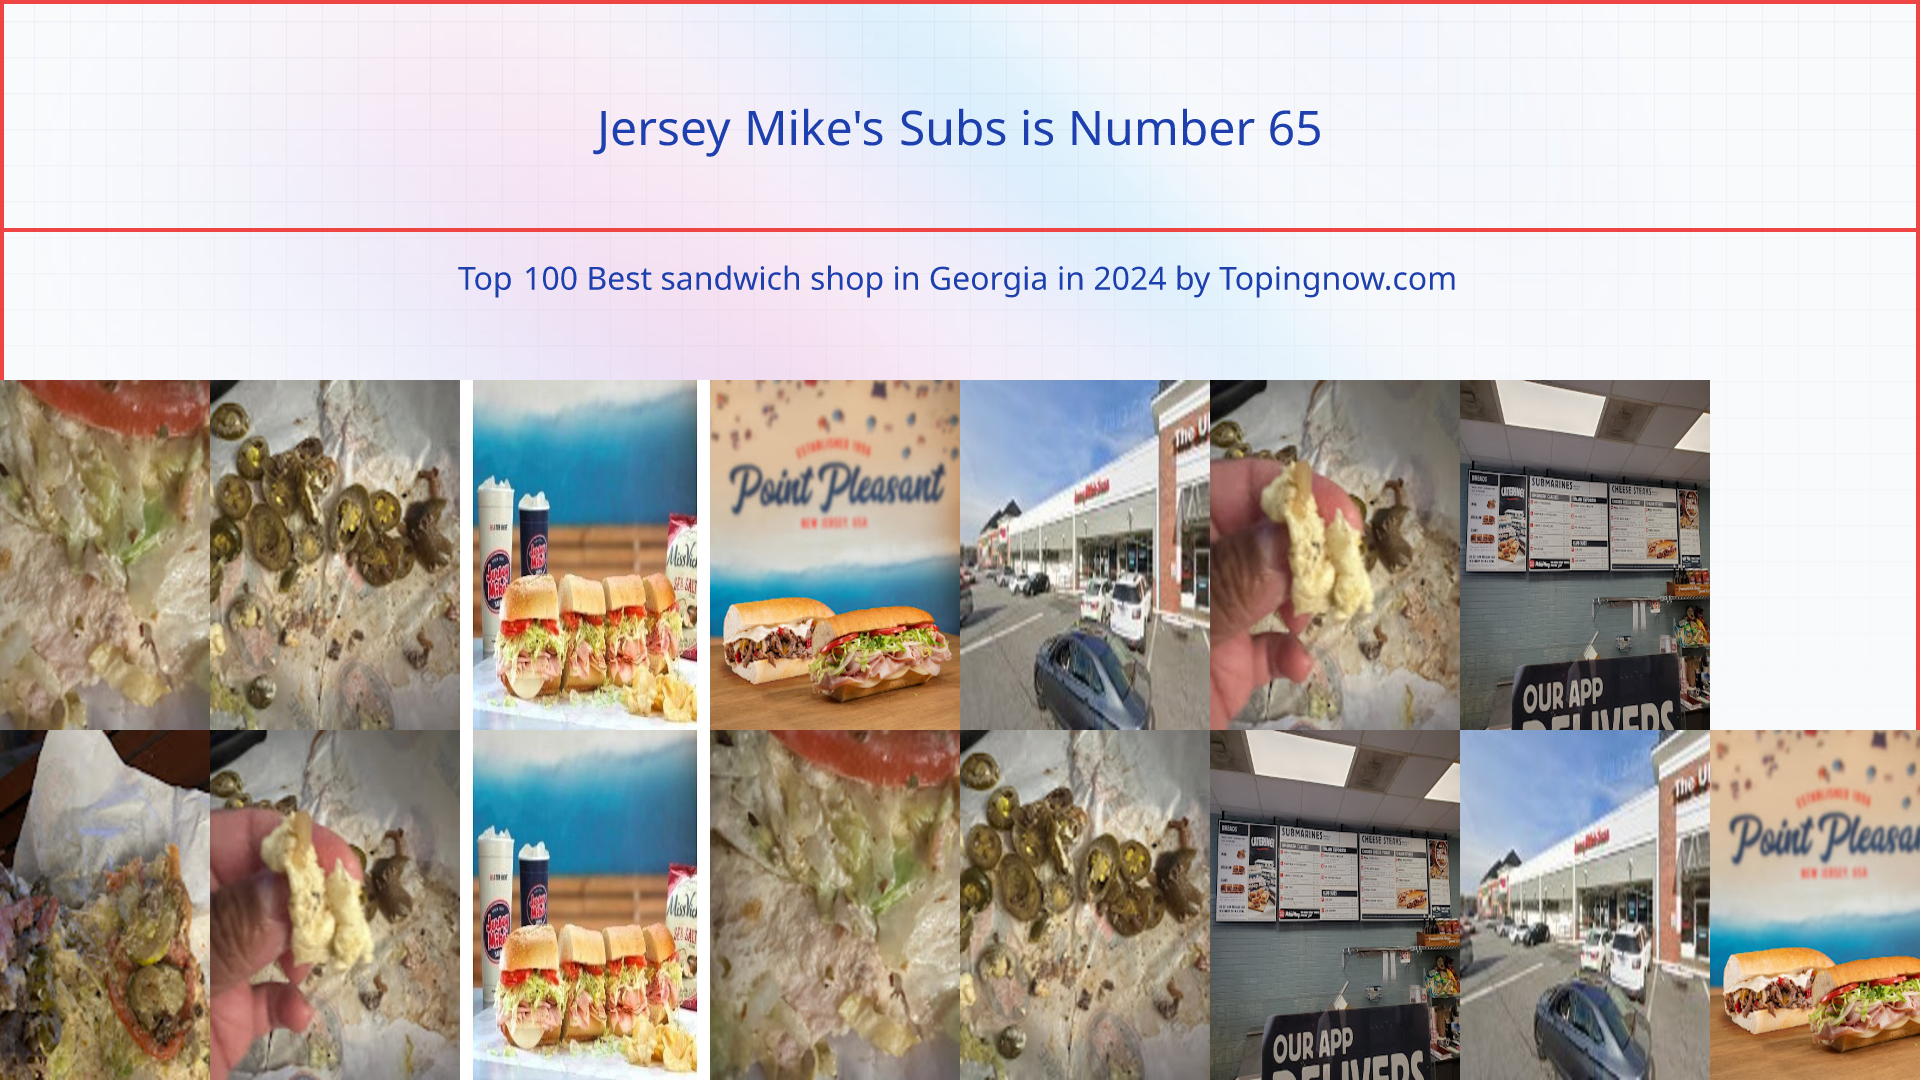 Jersey Mike's Subs: Top 100 Best sandwich shop in Georgia in 2024